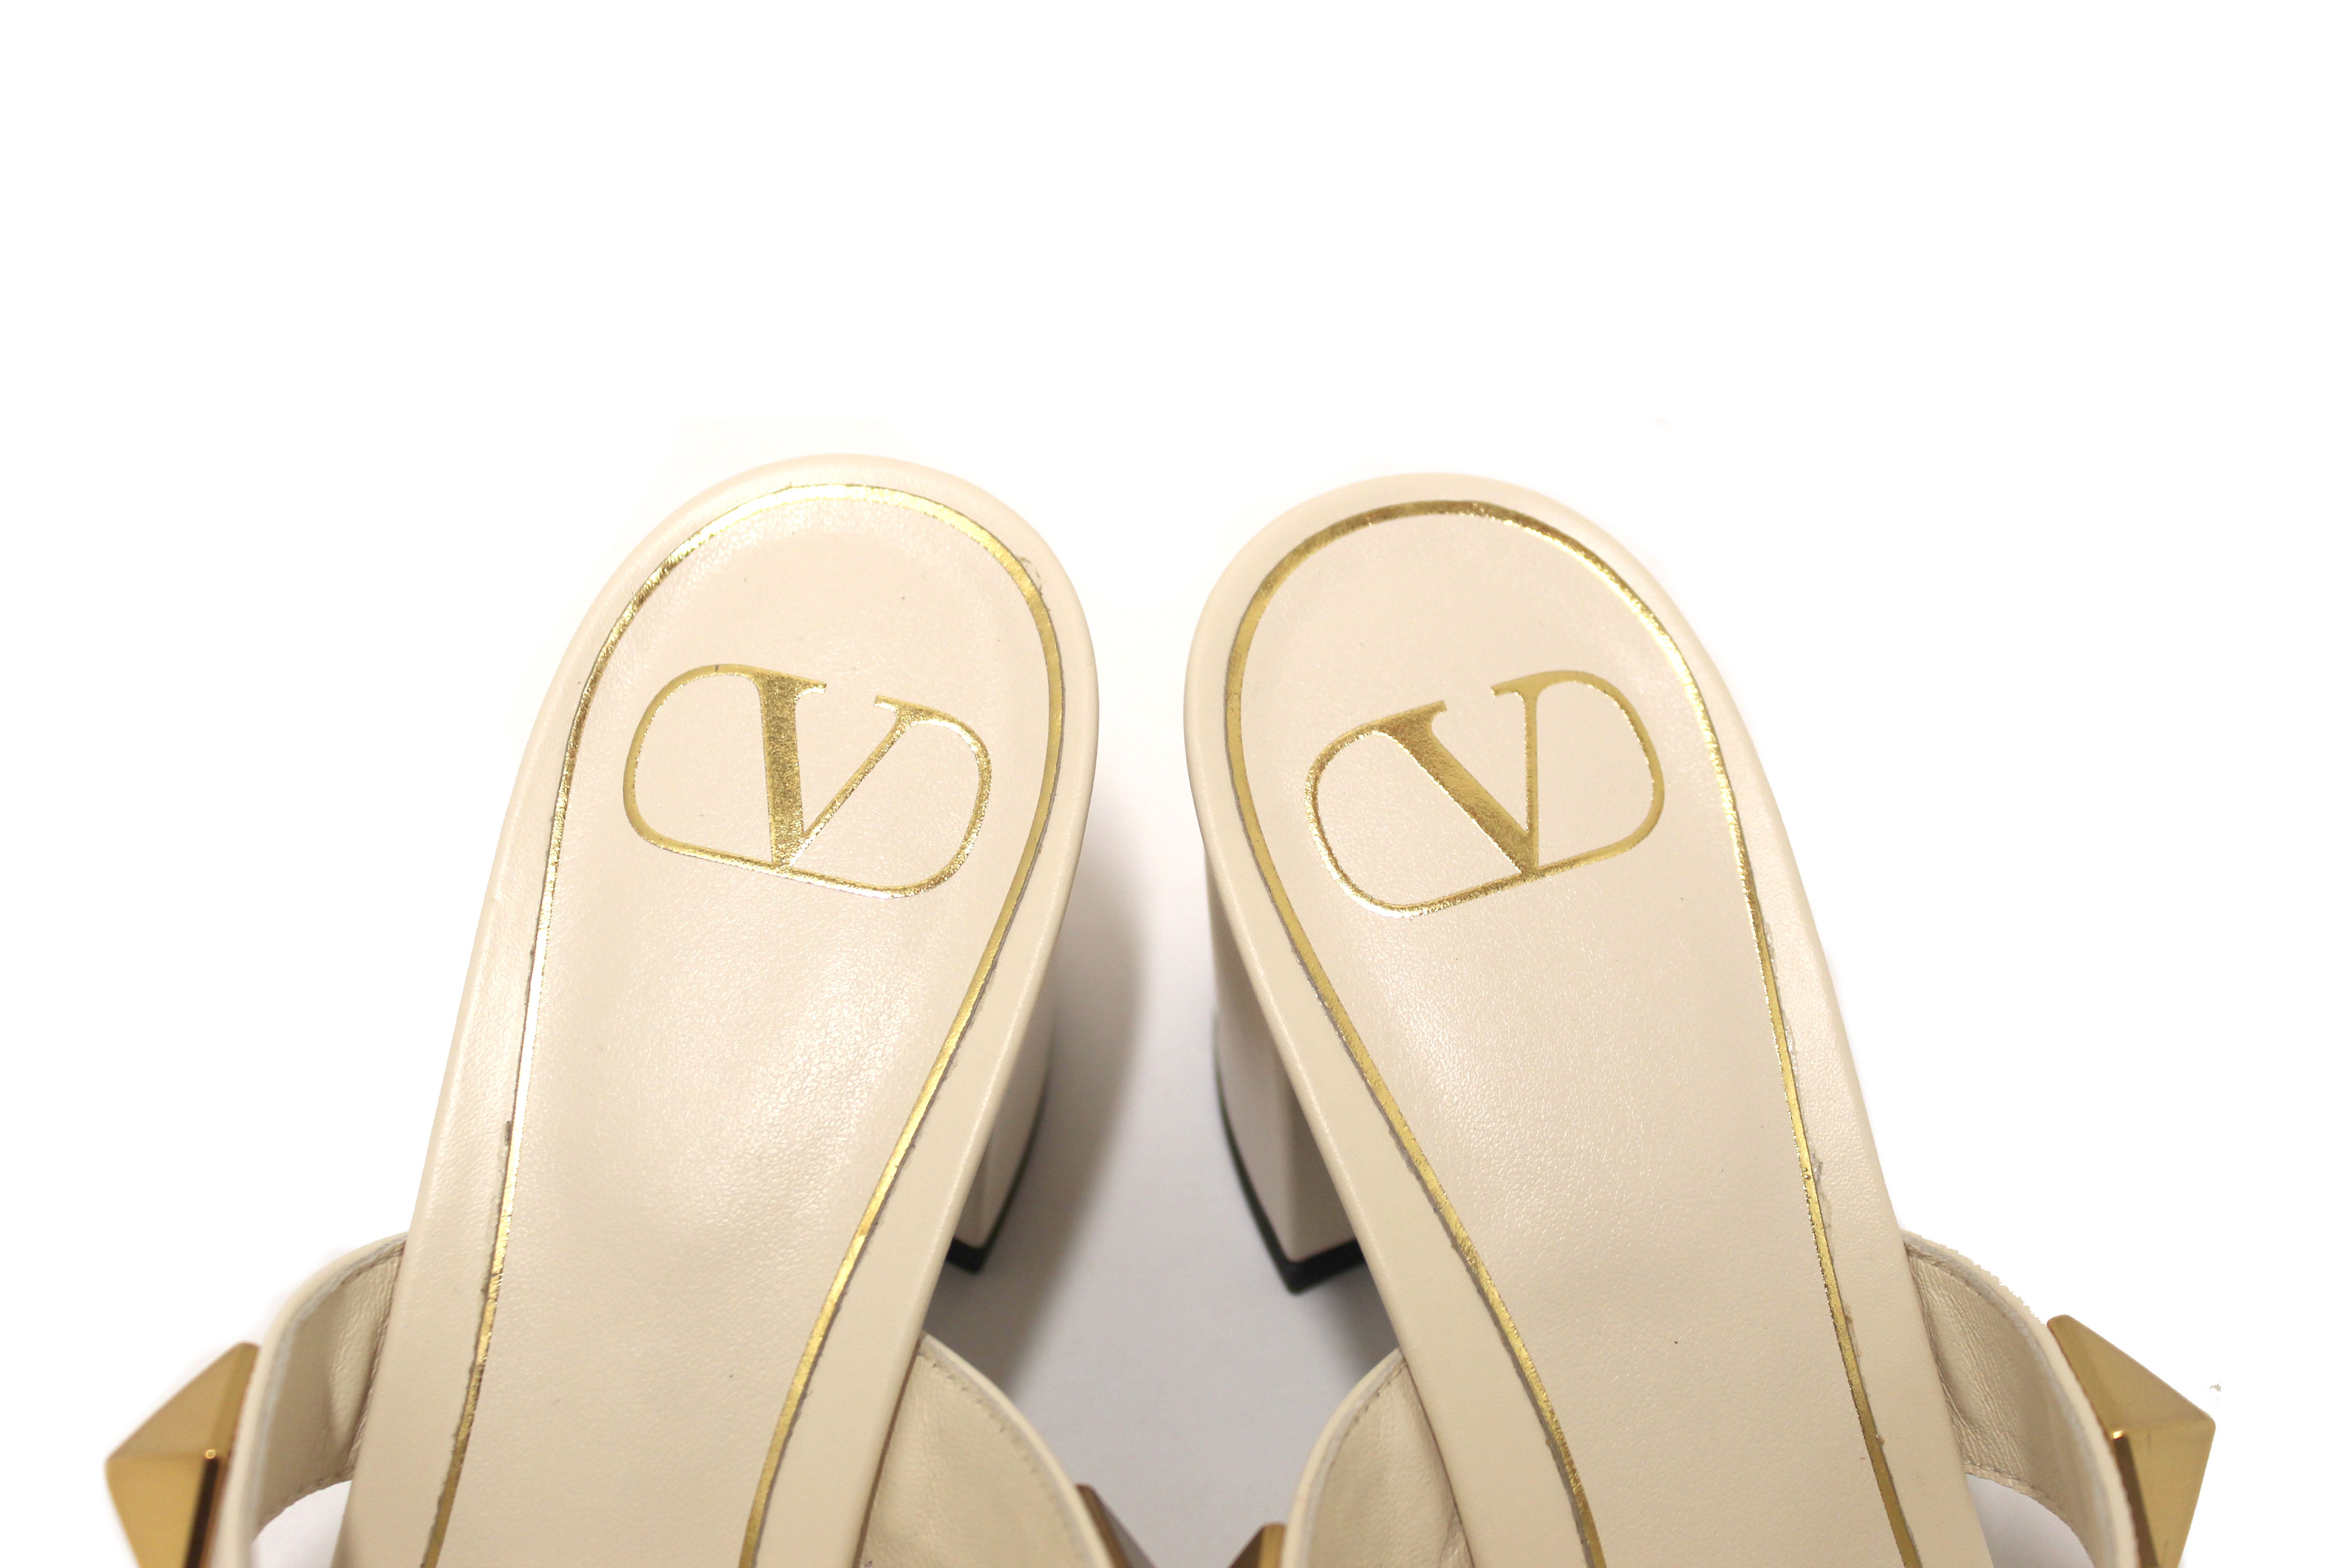 Authentic Valentino Garavani White Leather Roman Stud Sandals Size 38.5